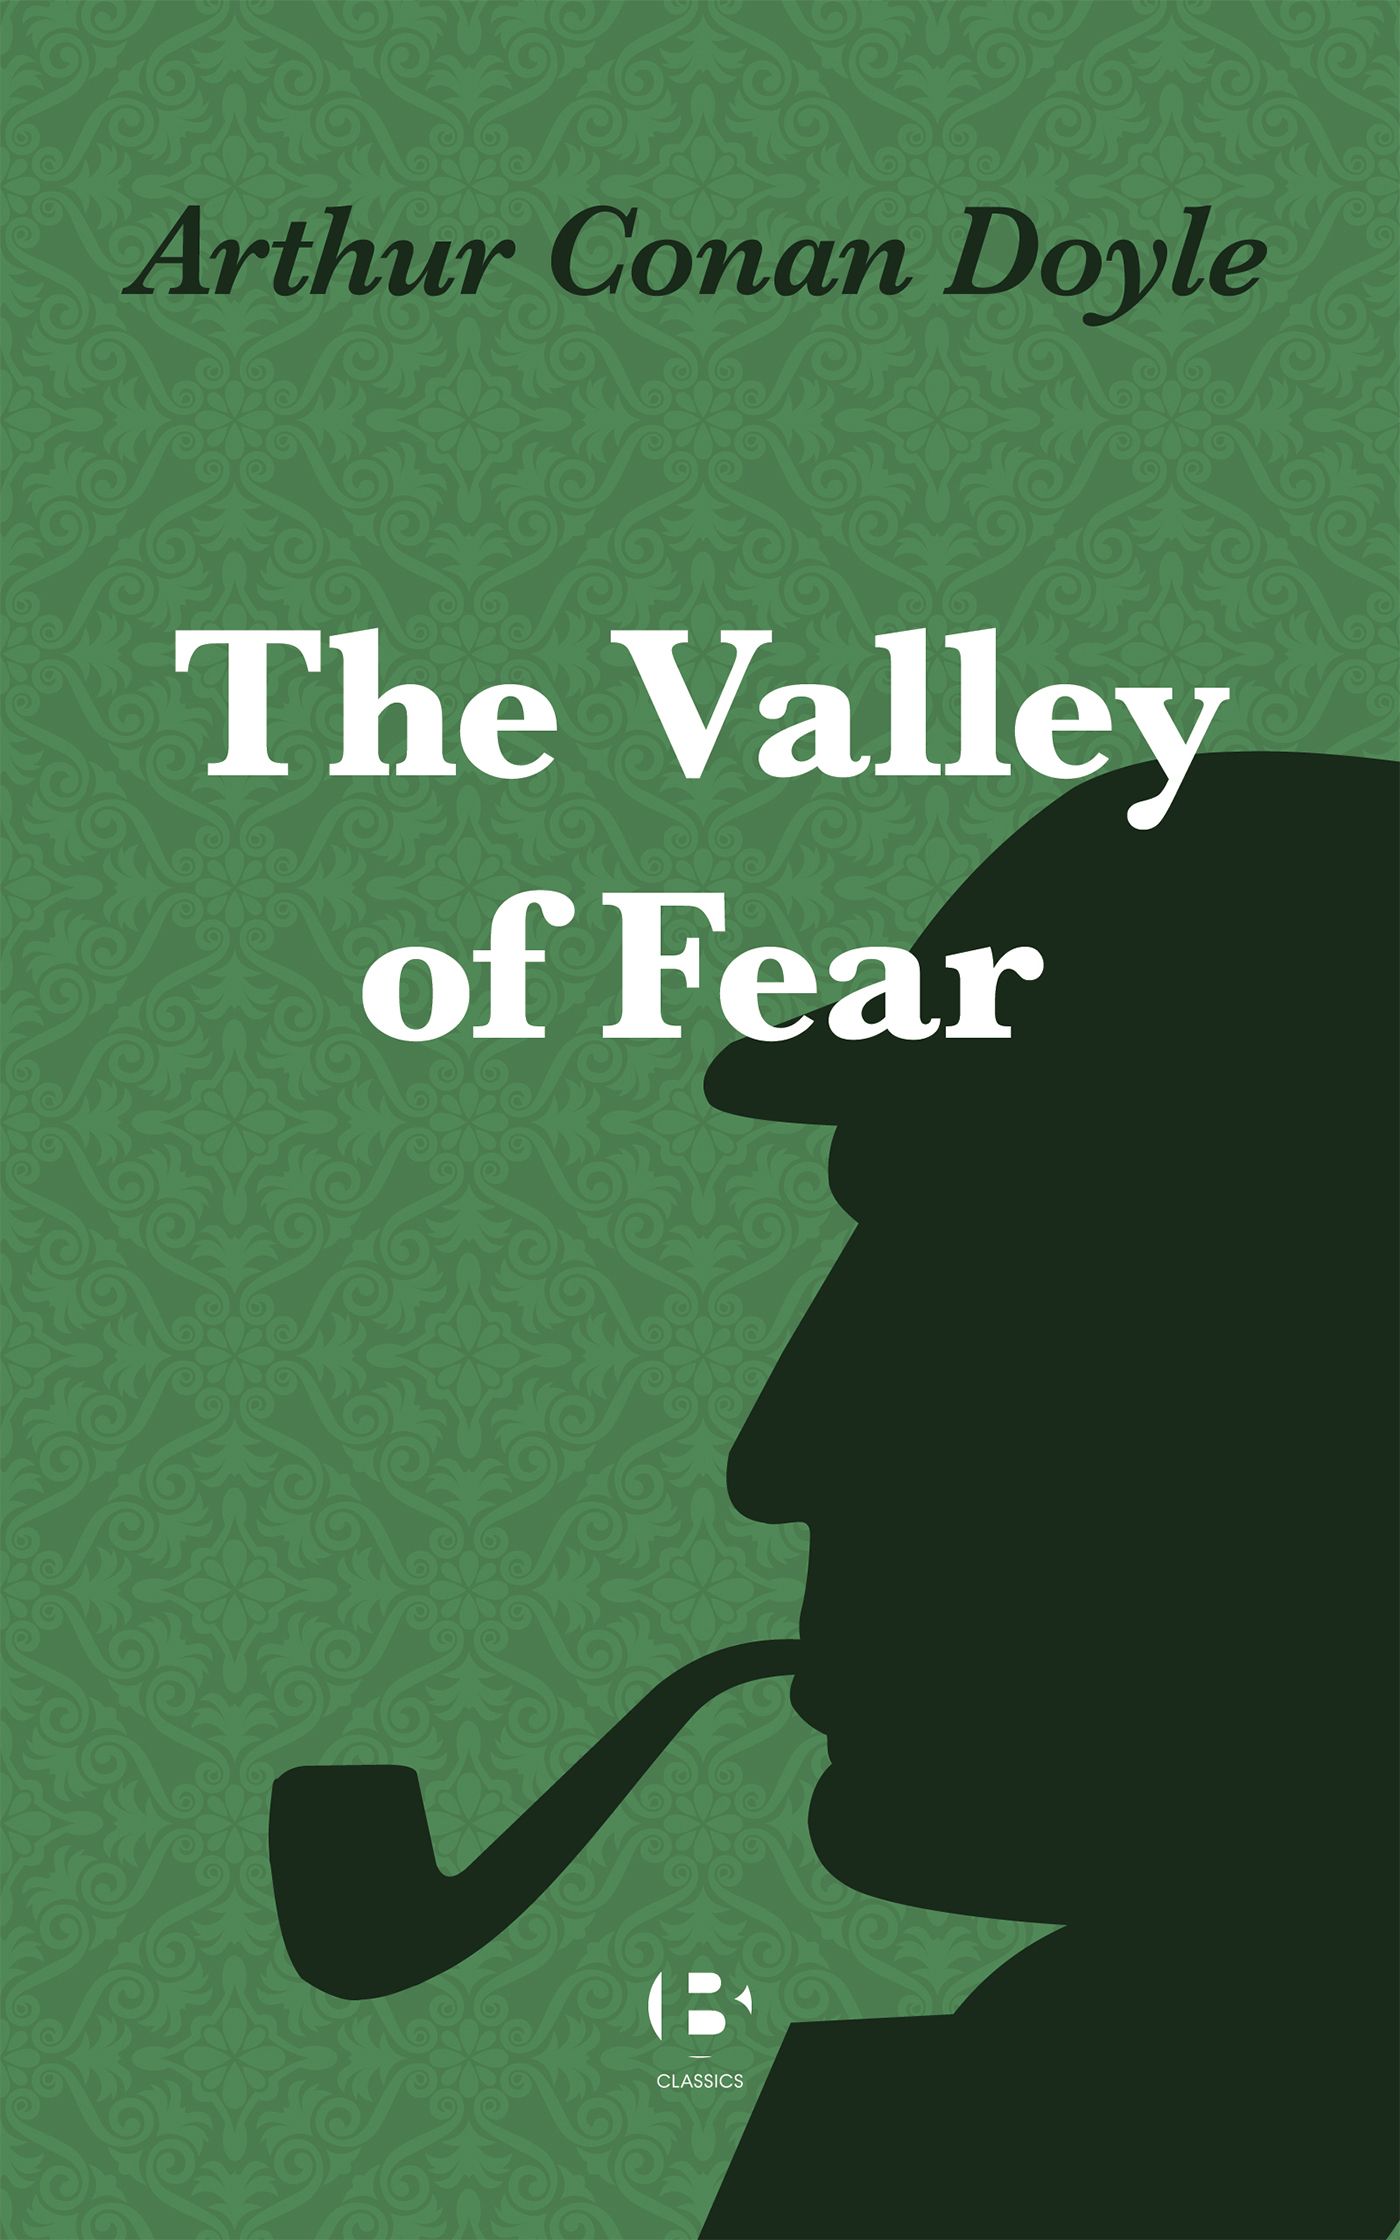 The Valley of Fear	, e-bog af Arthur Conan Doyle